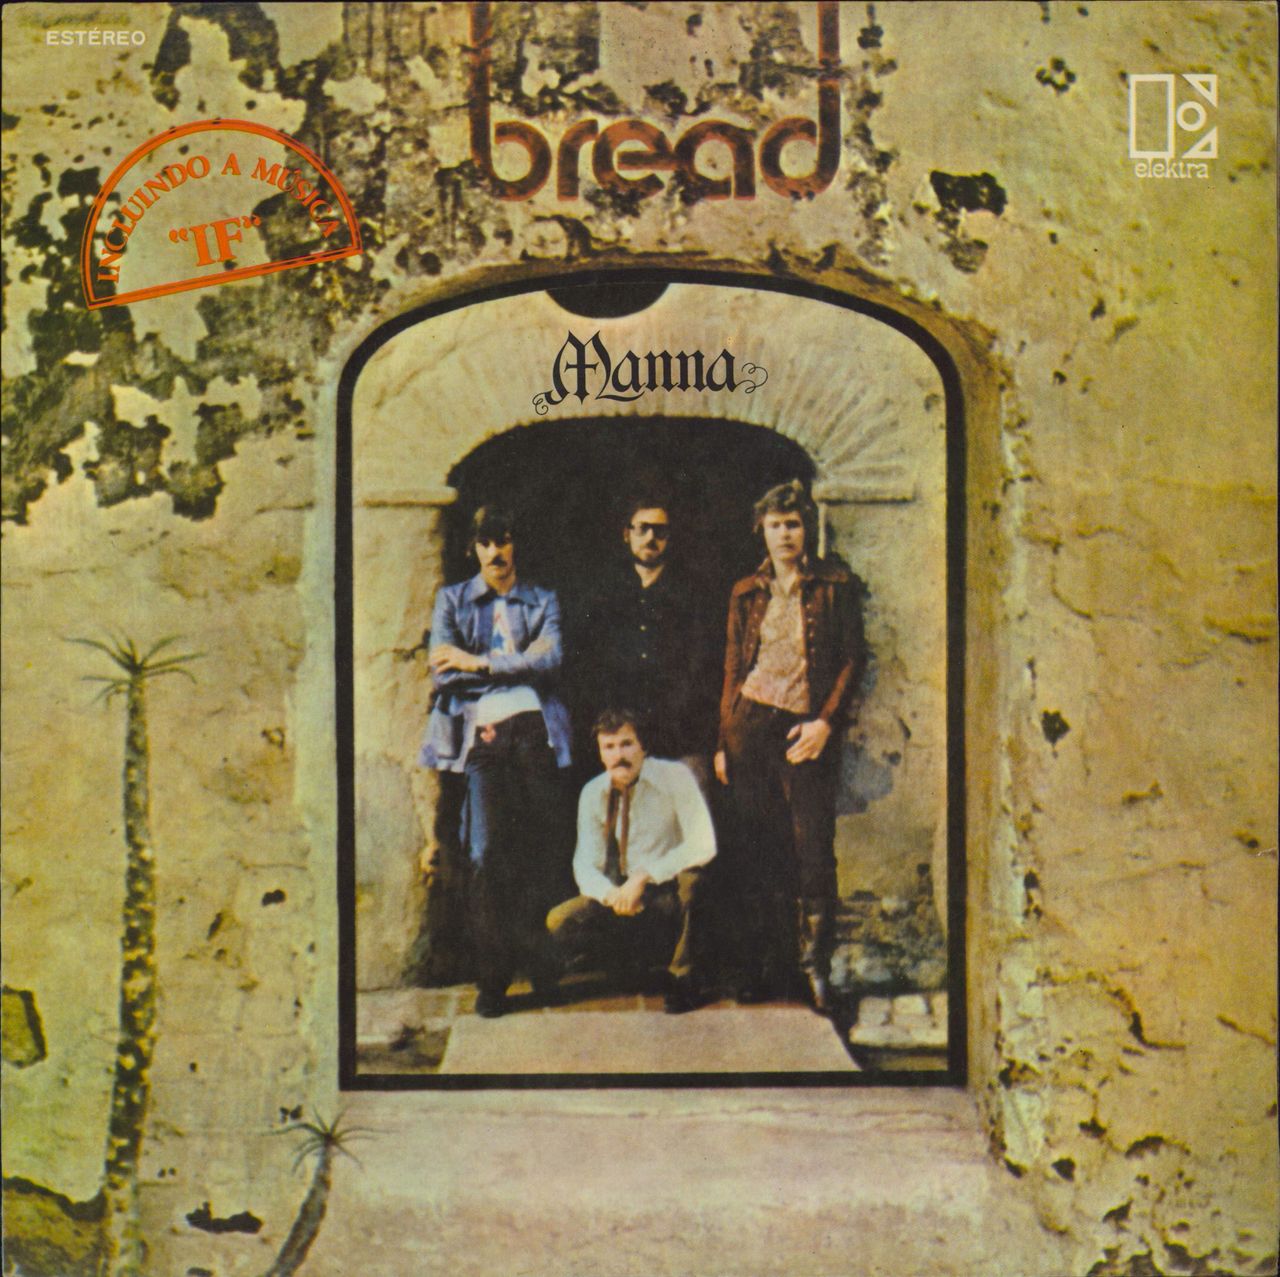 Bread Manna Brazilian vinyl LP album (LP record) 65.001